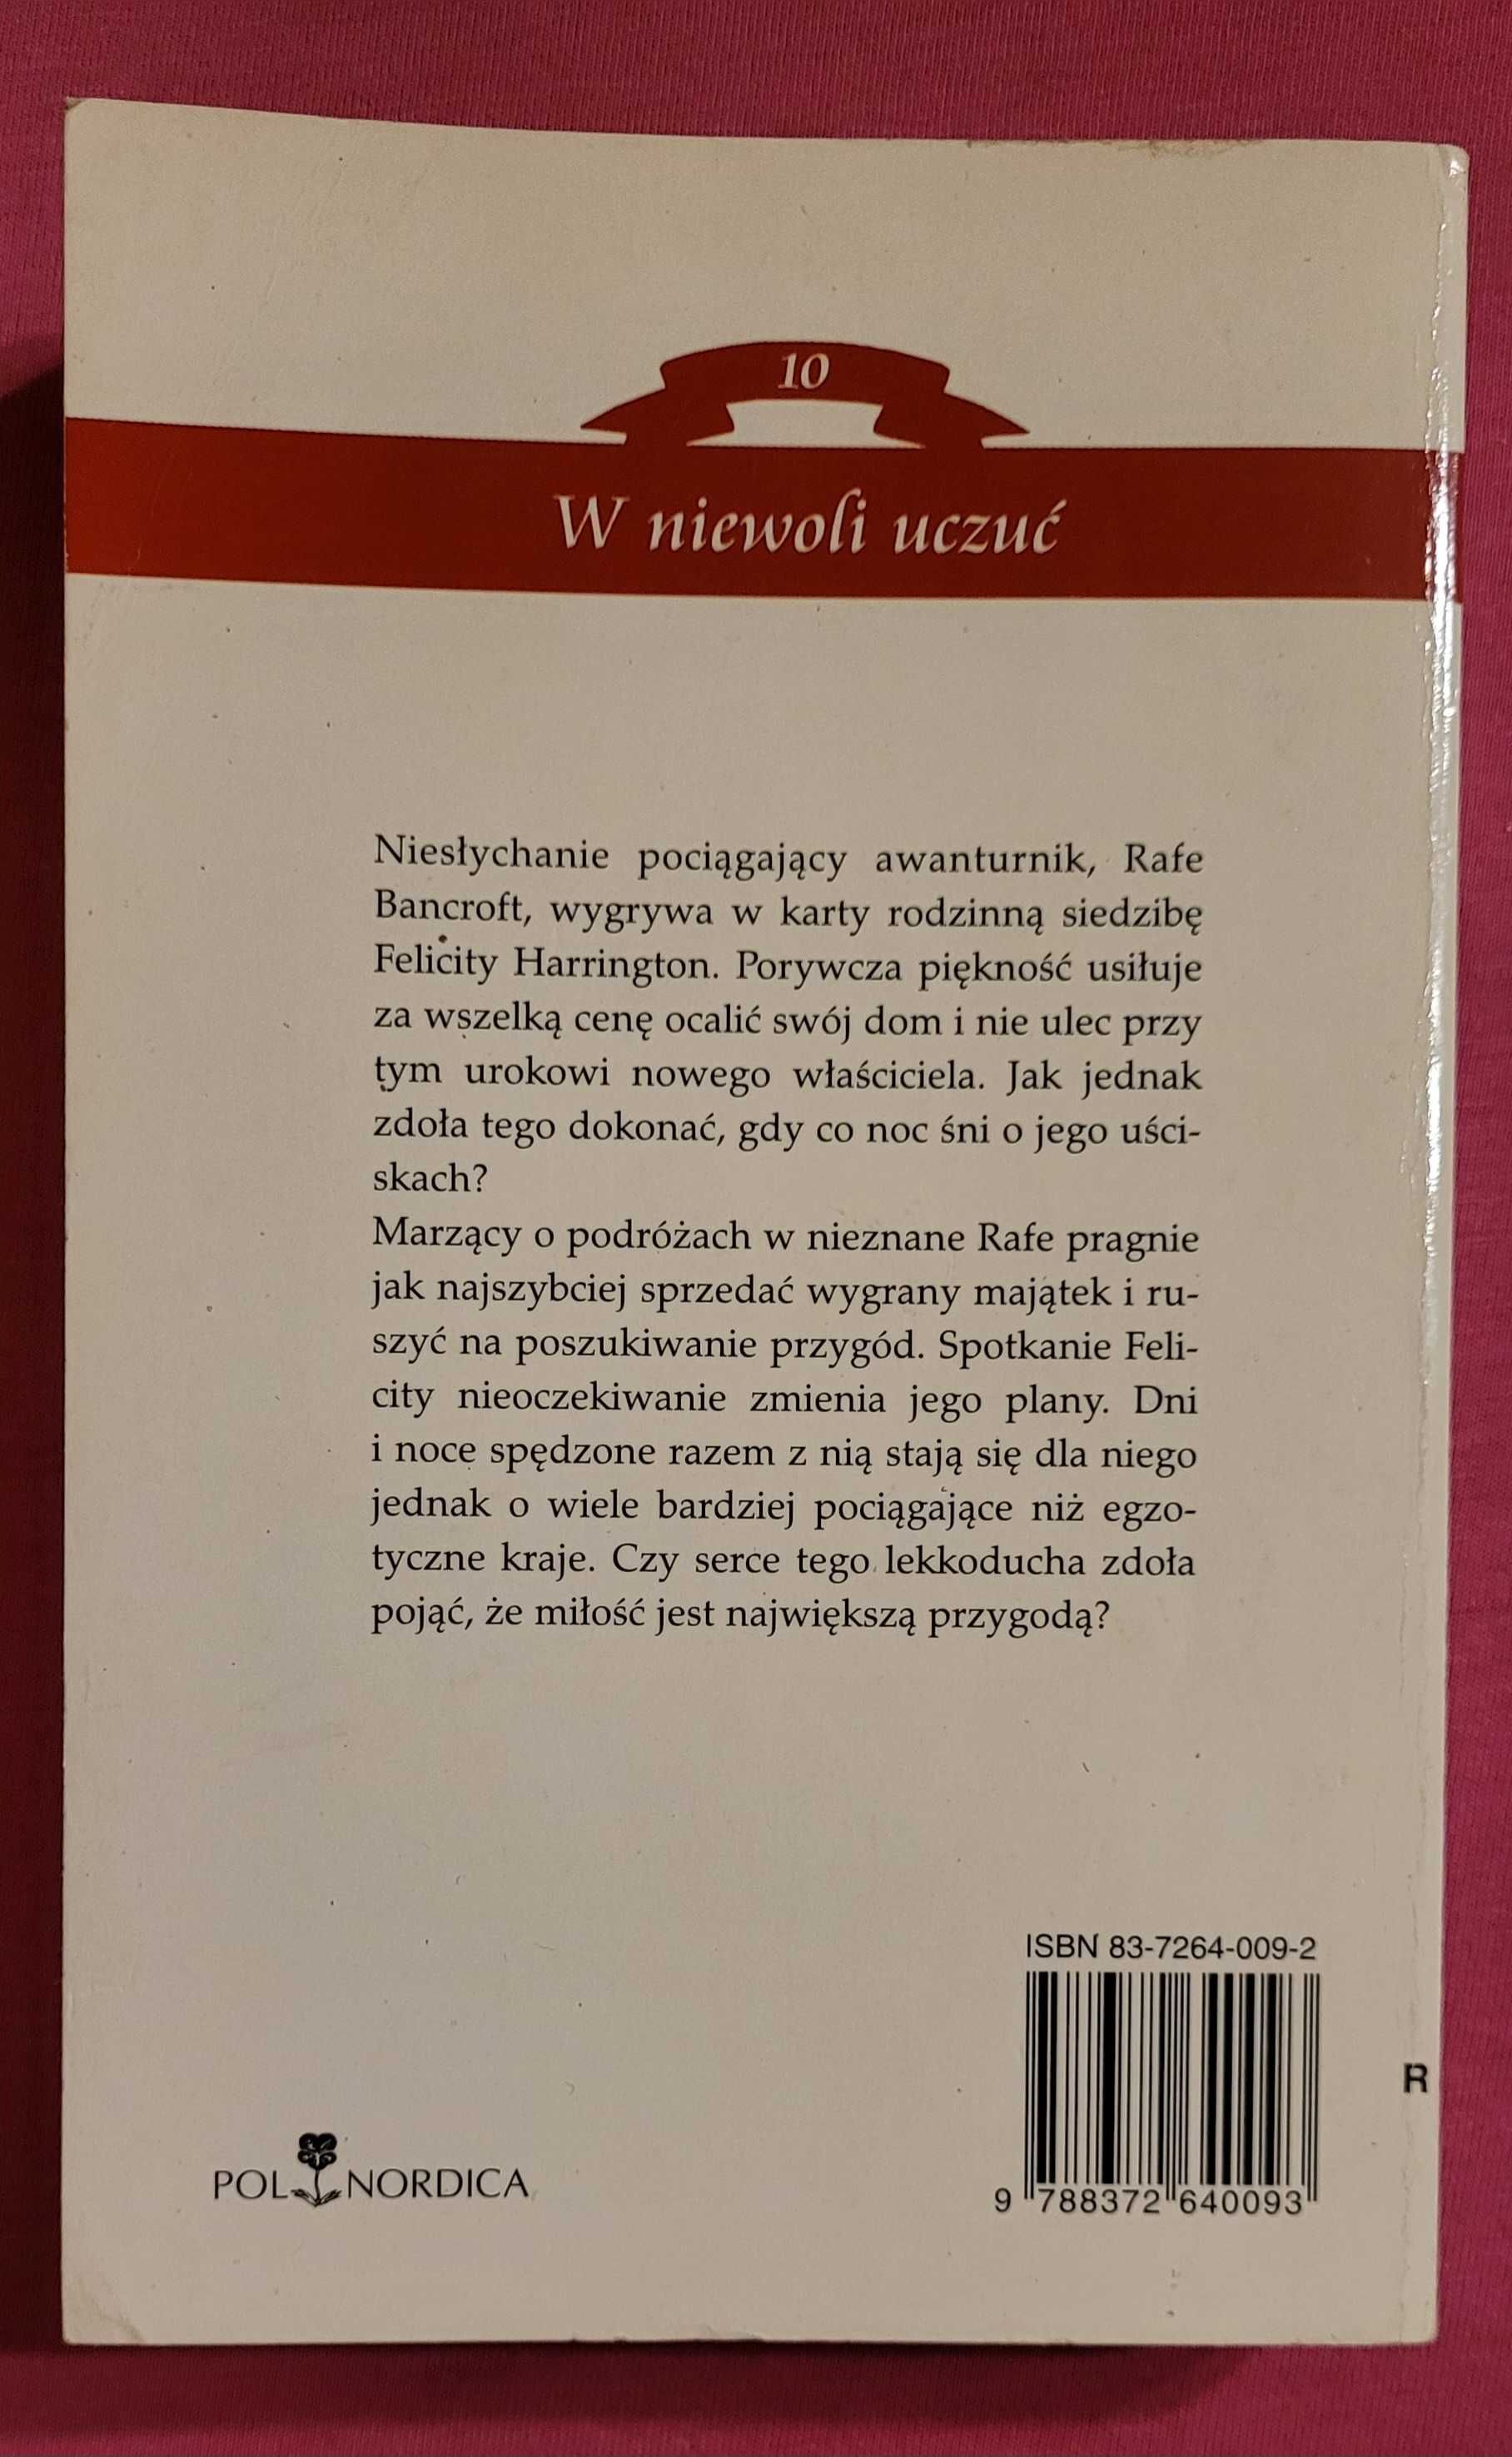 Romans historyczny "W niewoli uczuc" autorki Susanne Enoch RSL nr 10